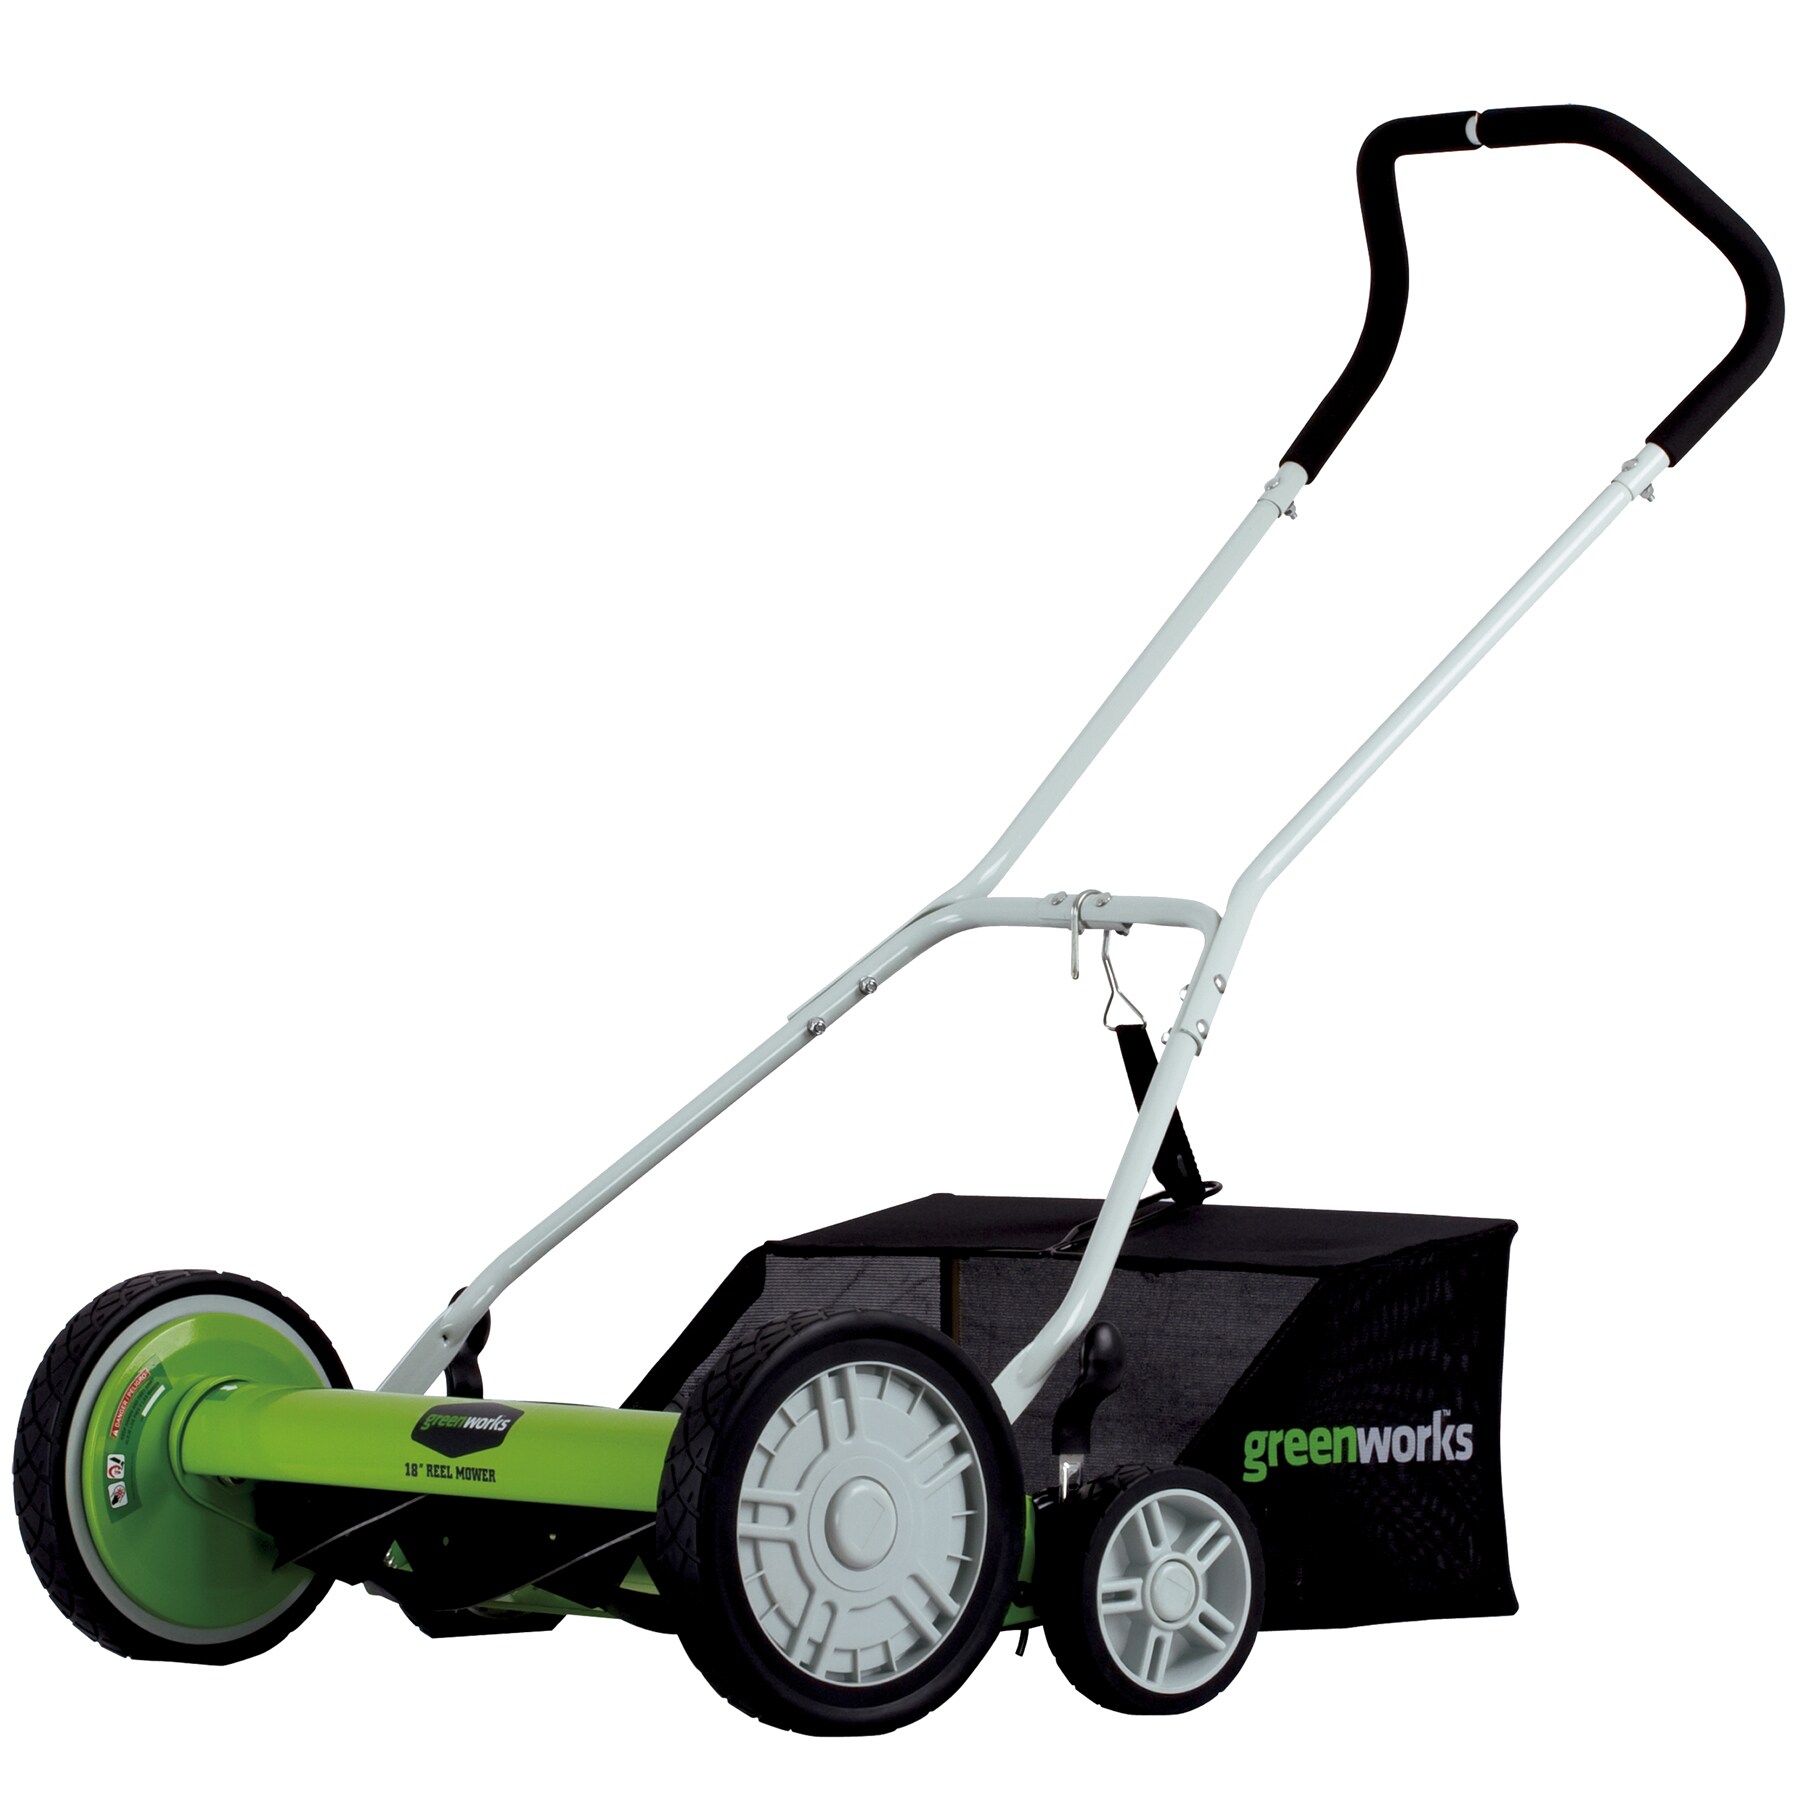 Greenworks 18-Inch Reel Lawn Mower